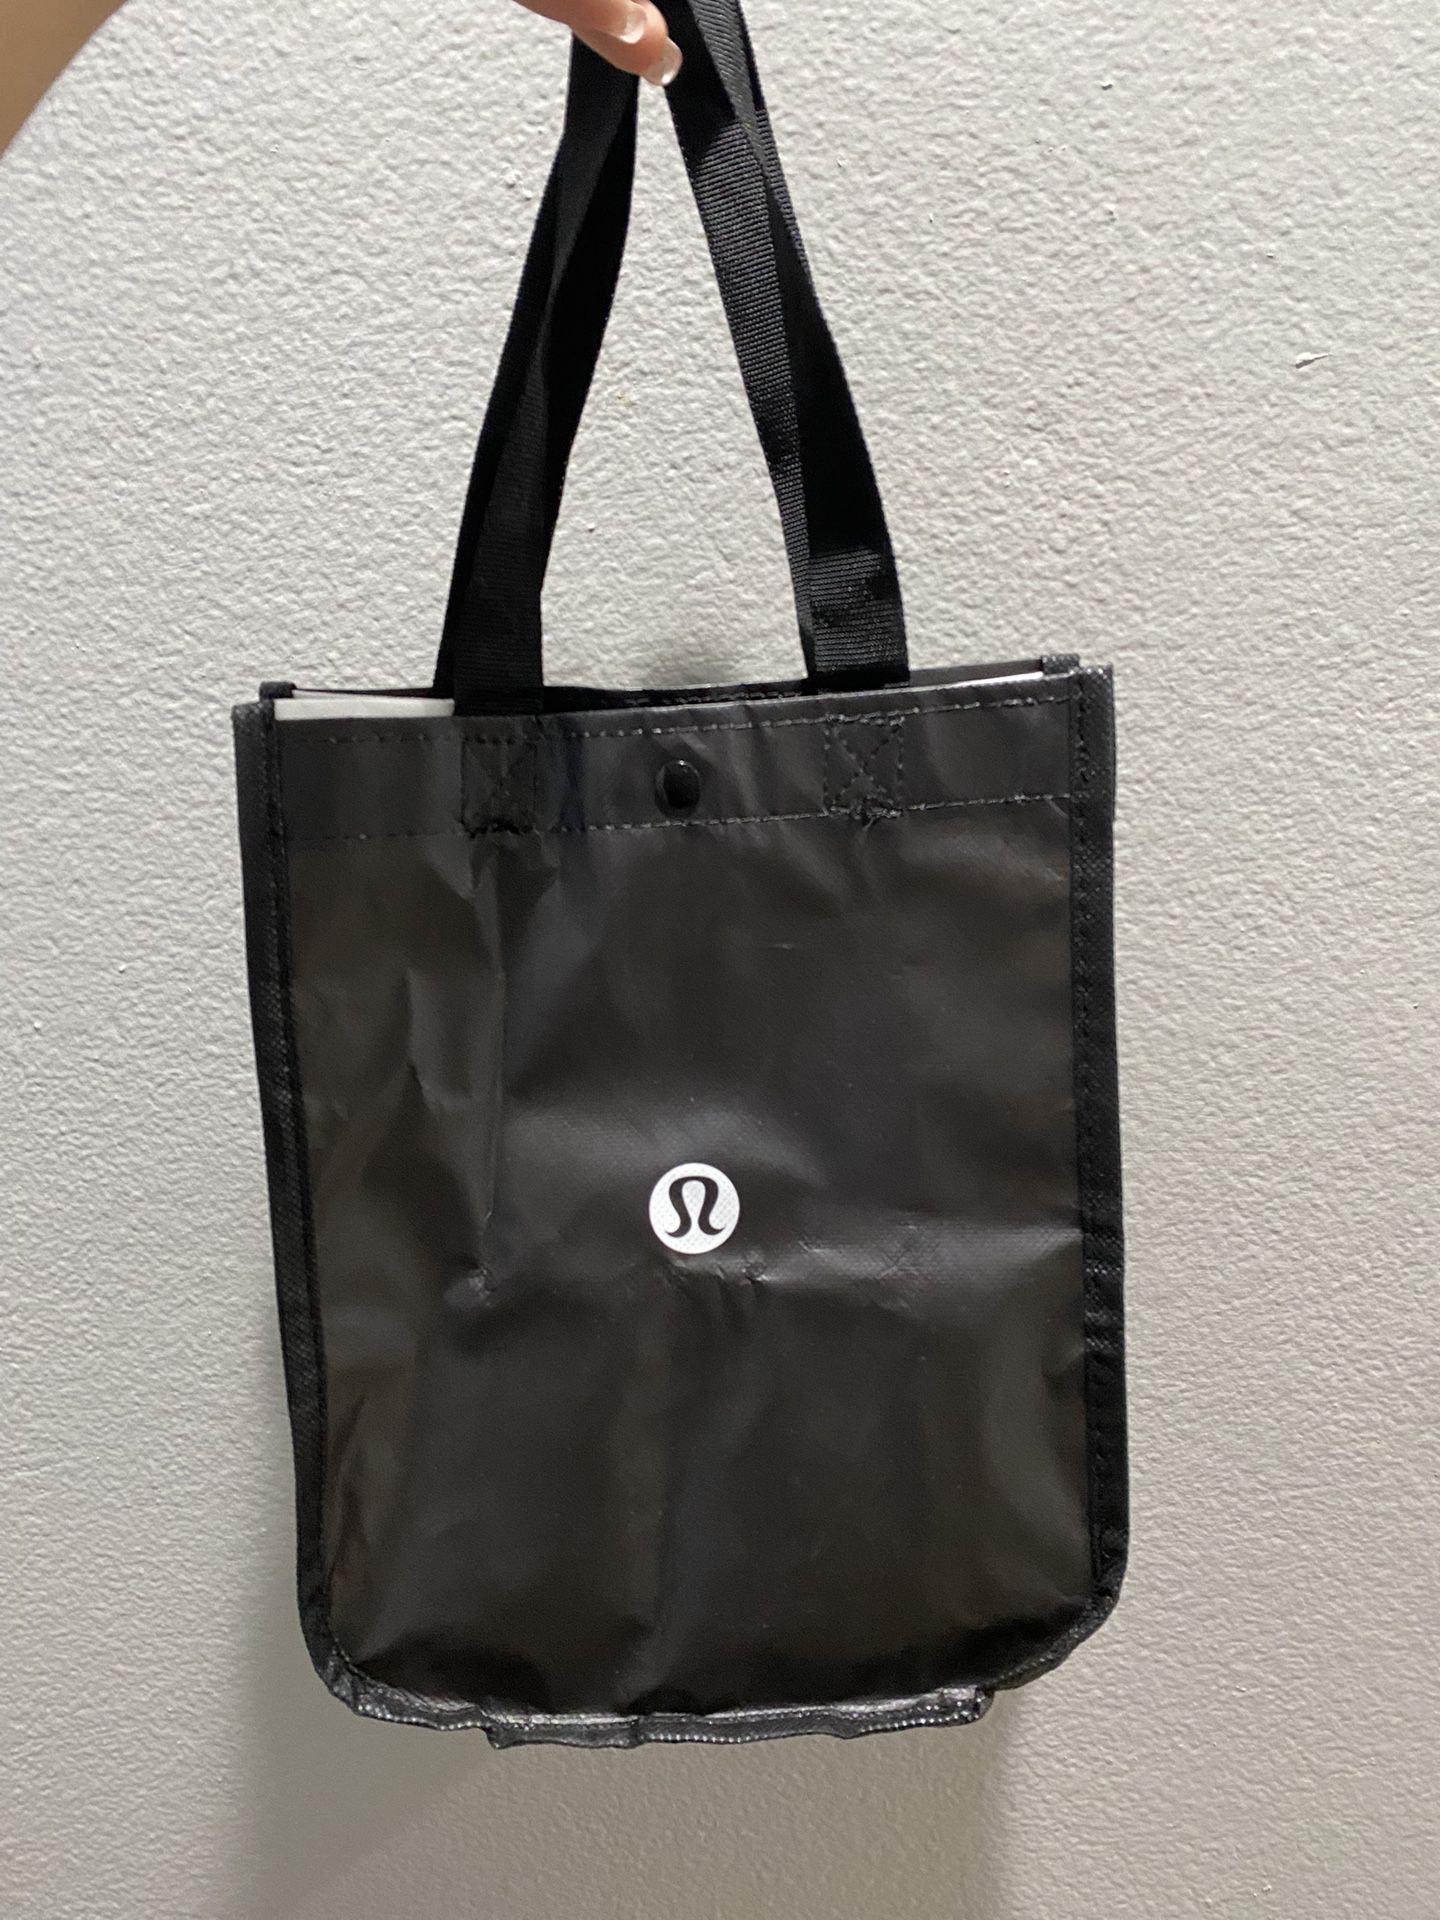 Lululemon Small Shopping Bag 